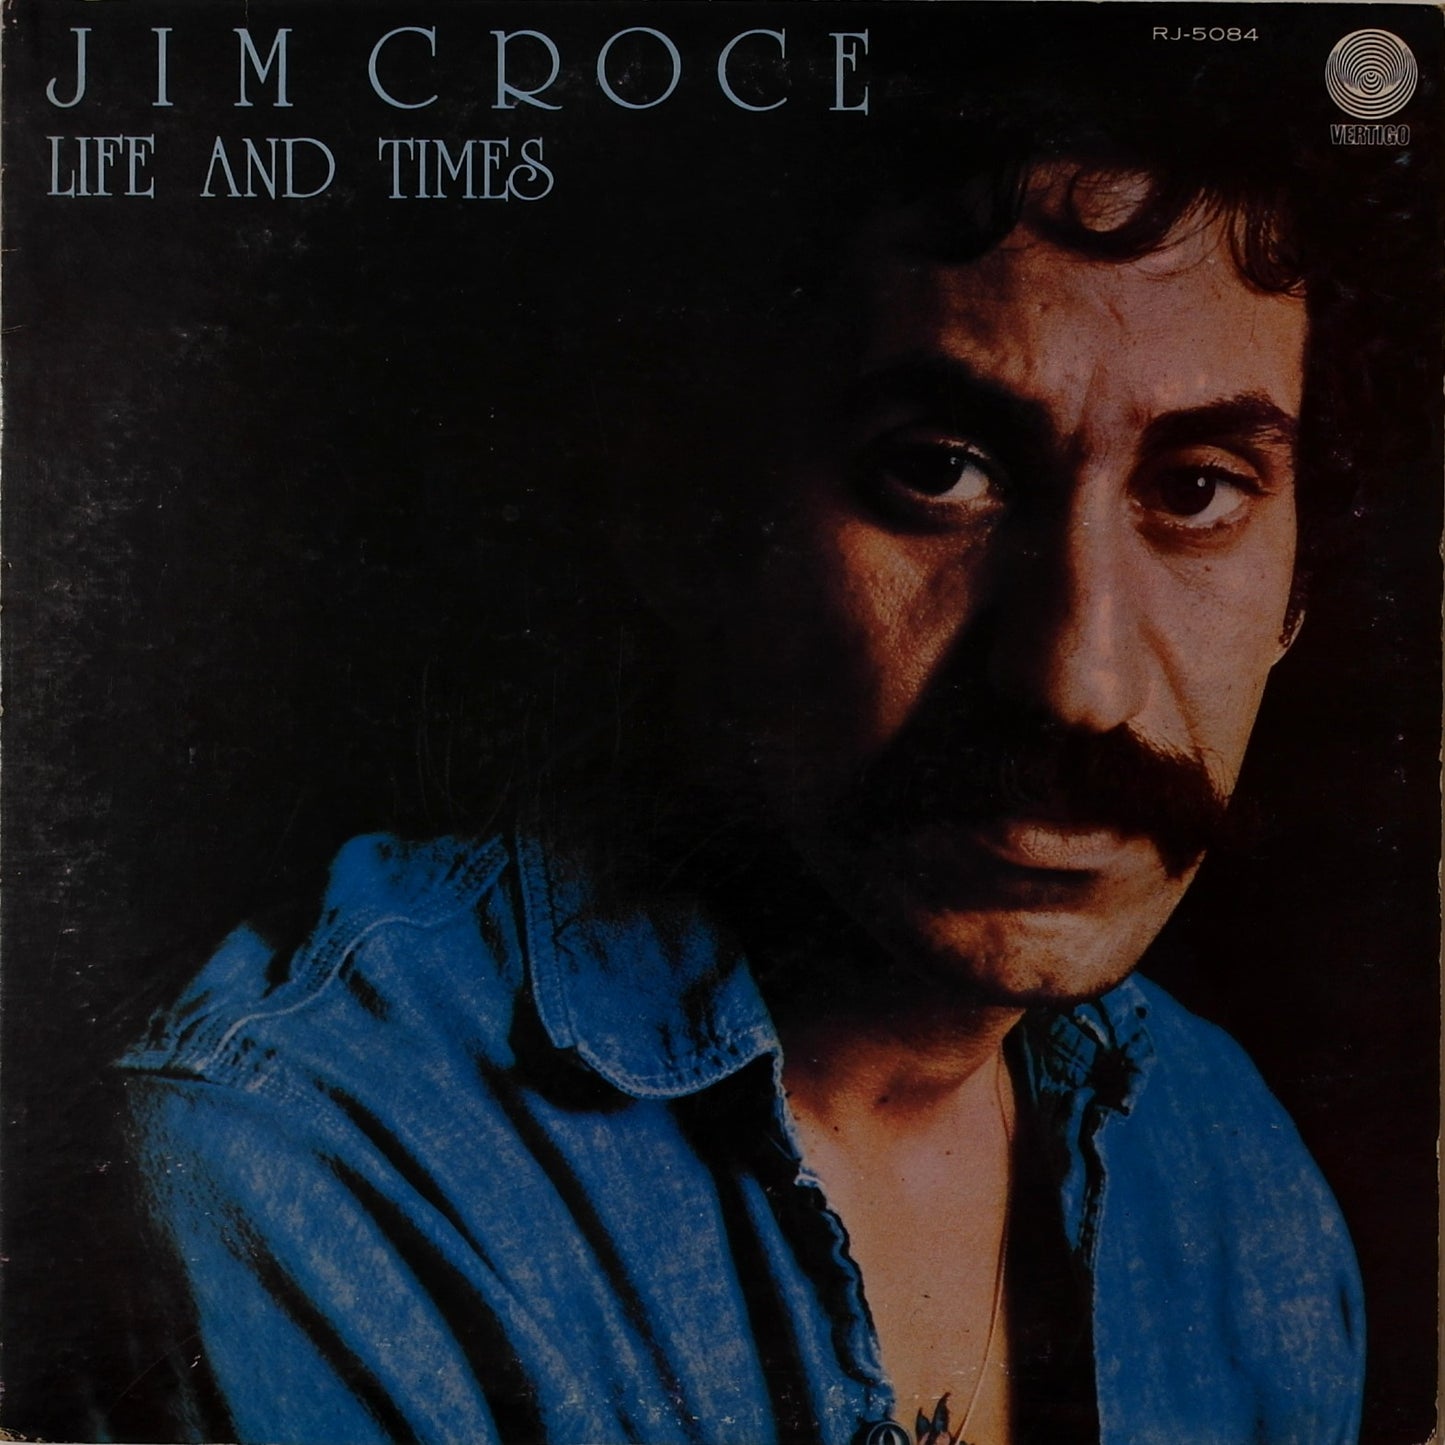 JIM CROCE - Life And Times